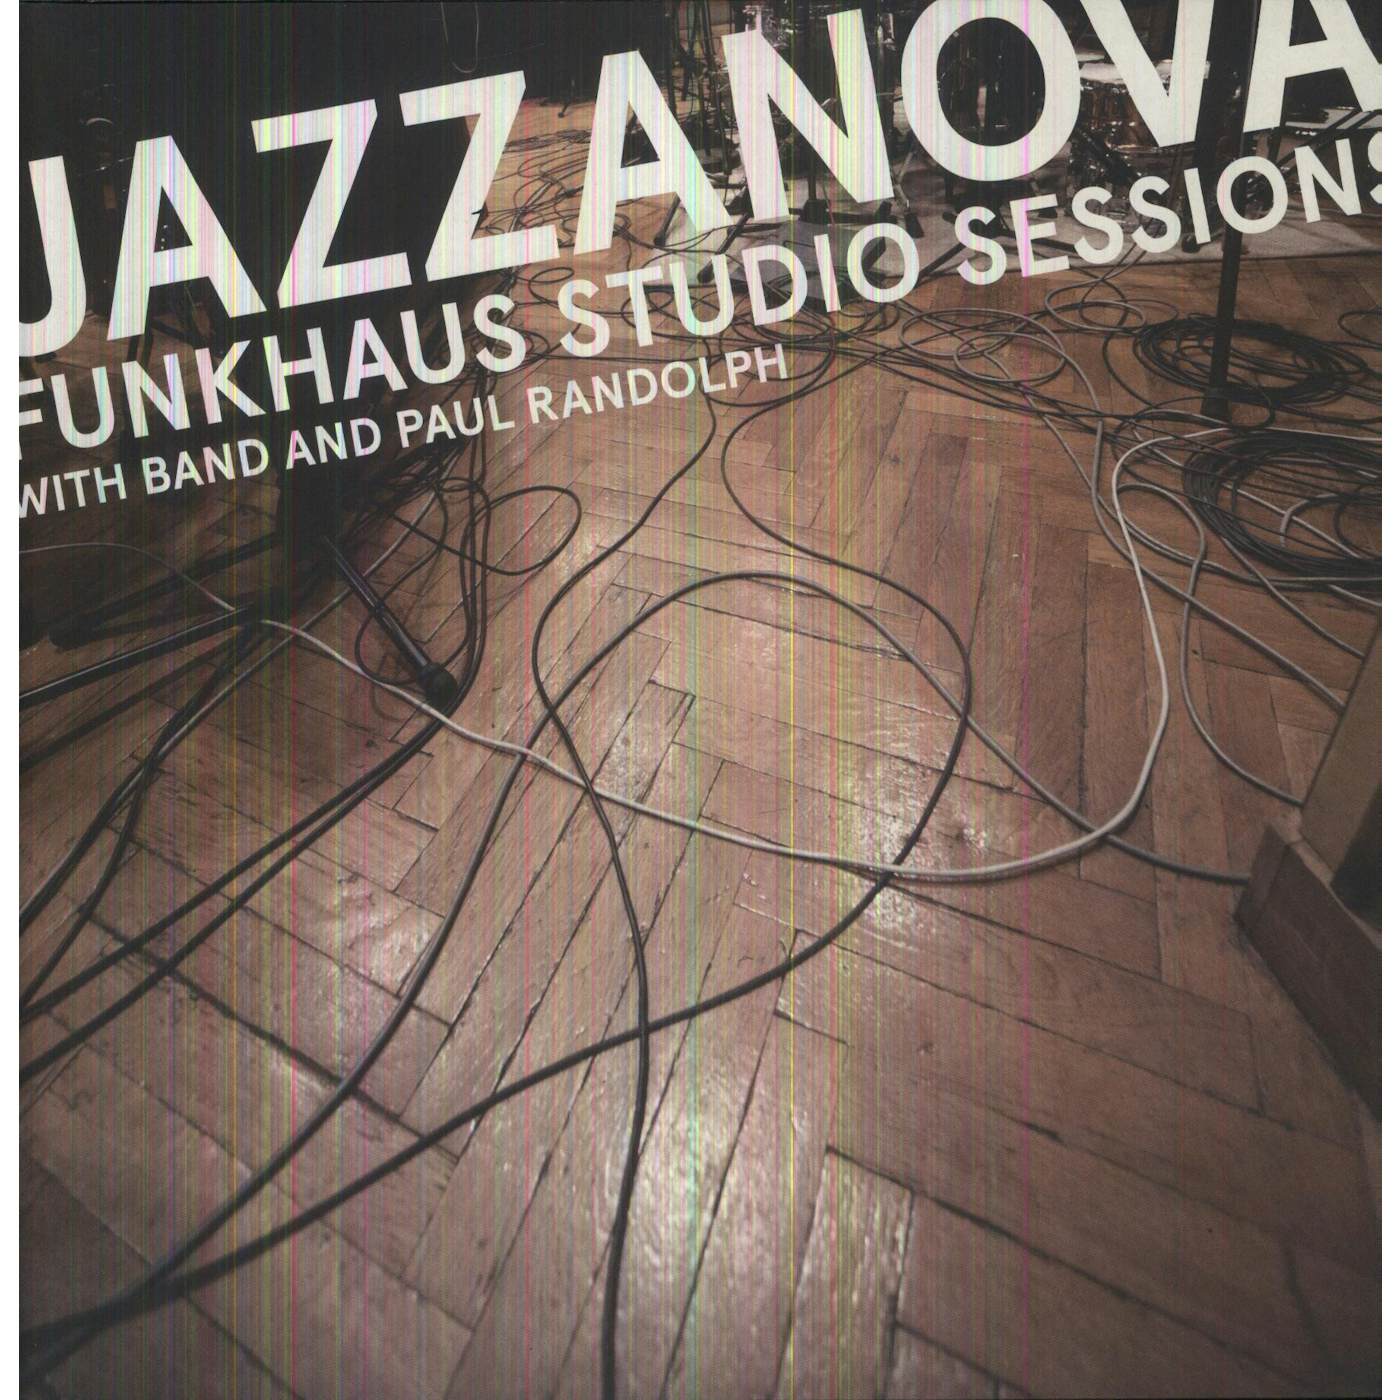 Jazzanova FUNKHAUS STUDIO SESSIONS (Vinyl)